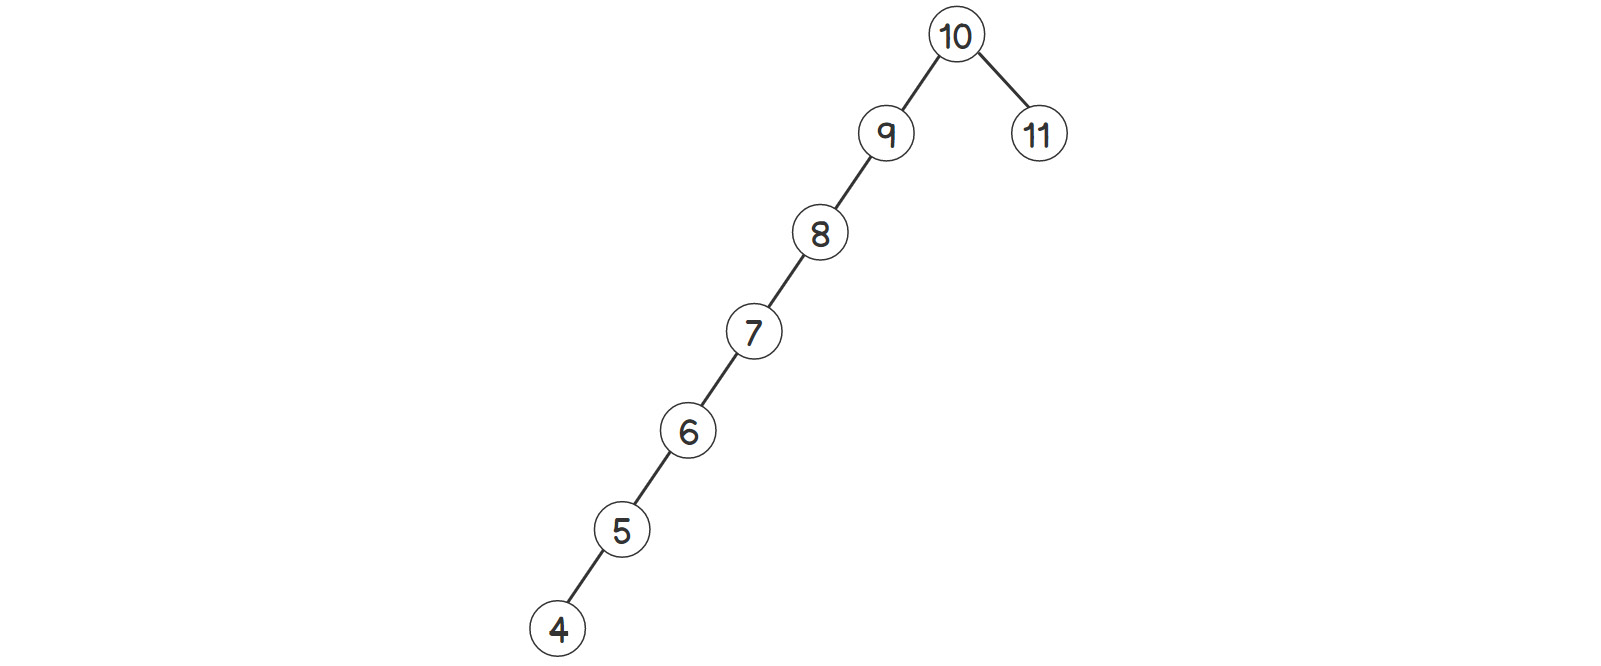 Figure 2.10: Skewed binary search tree